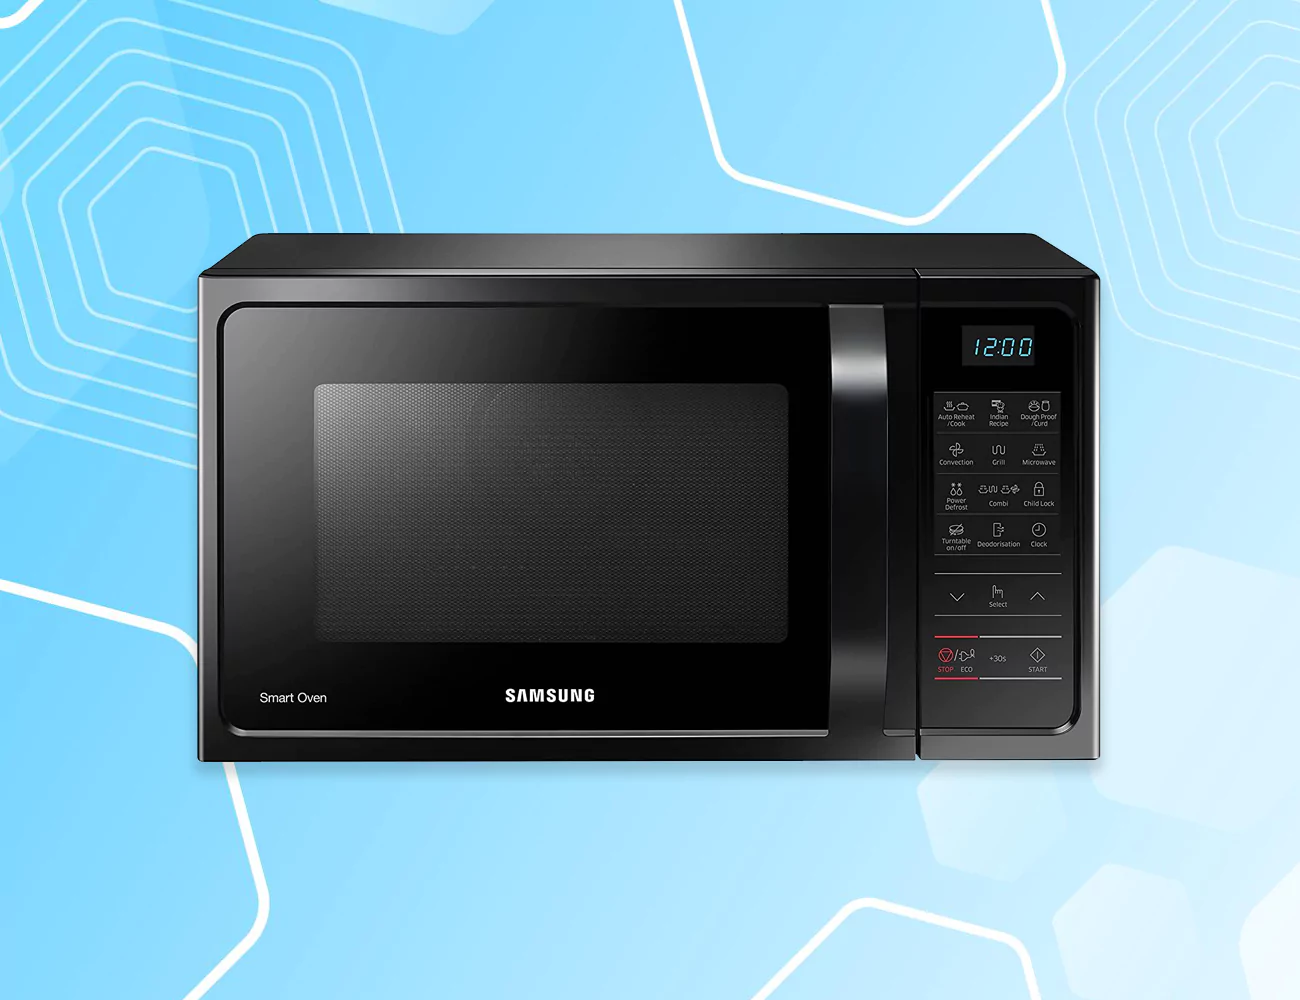 Samsung 28 L (MC28A5013AK/TL) Convection Microwave Oven